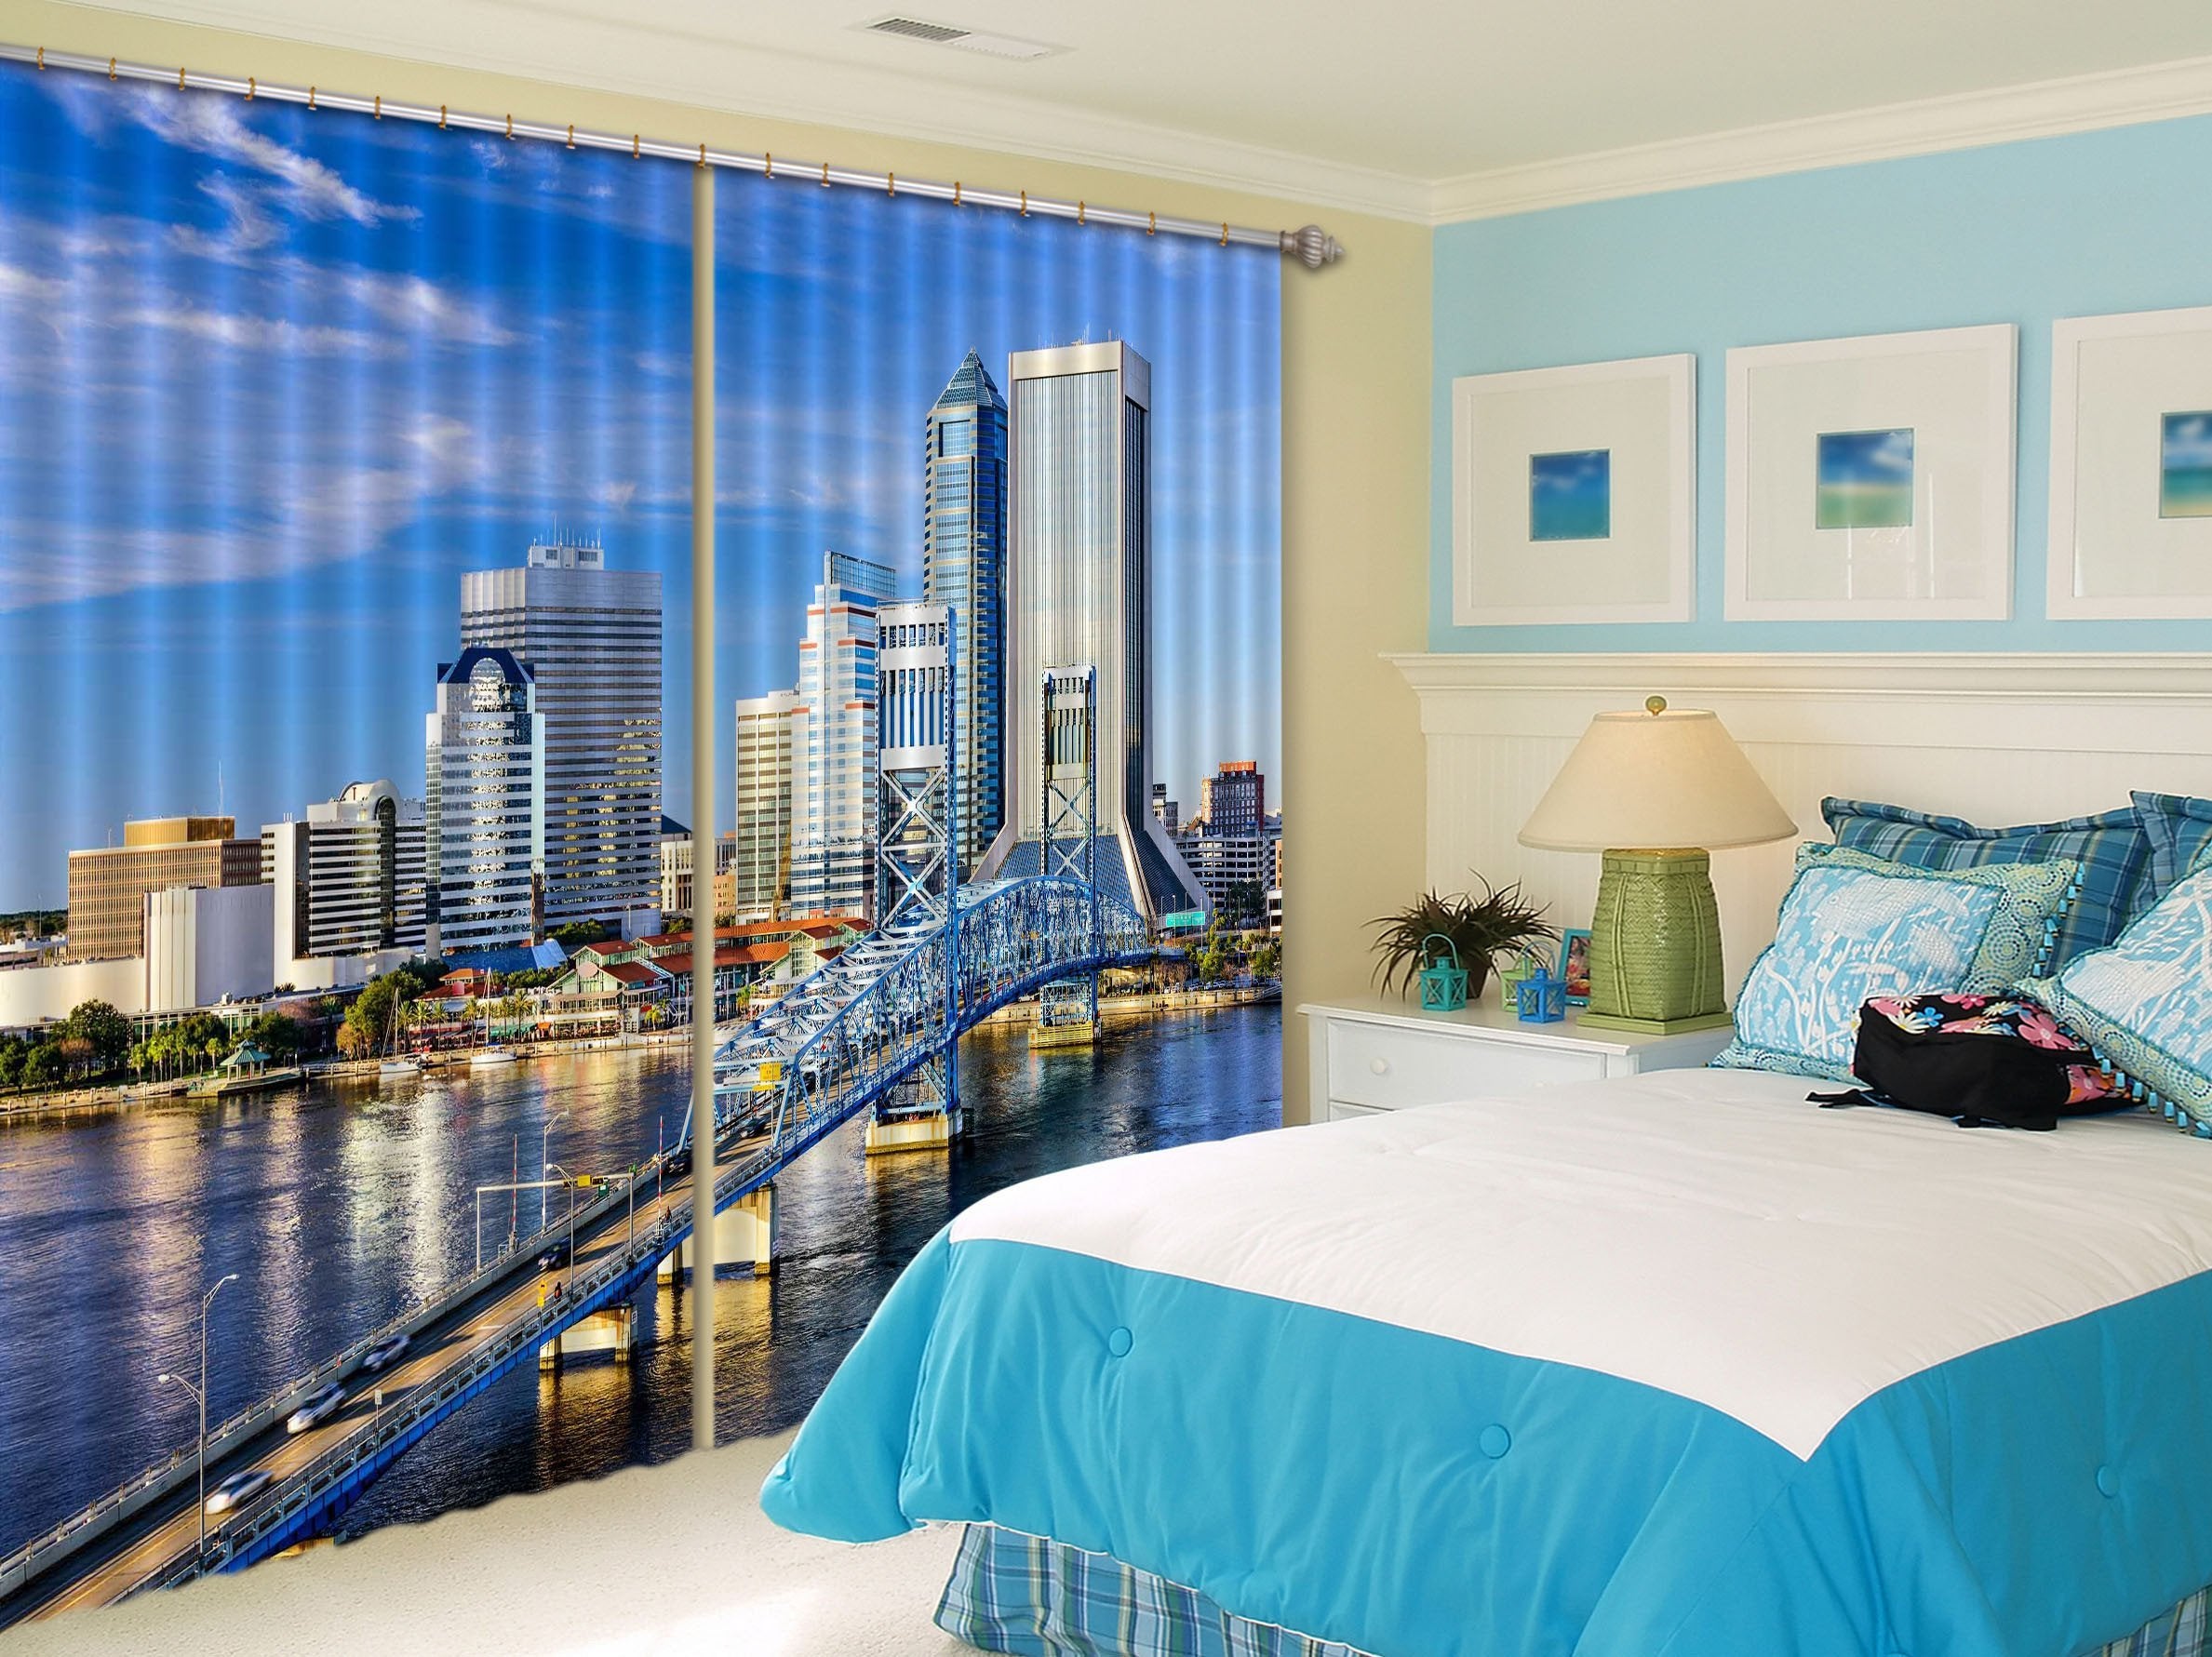 3D City Scenery 115 Curtains Drapes Wallpaper AJ Wallpaper 